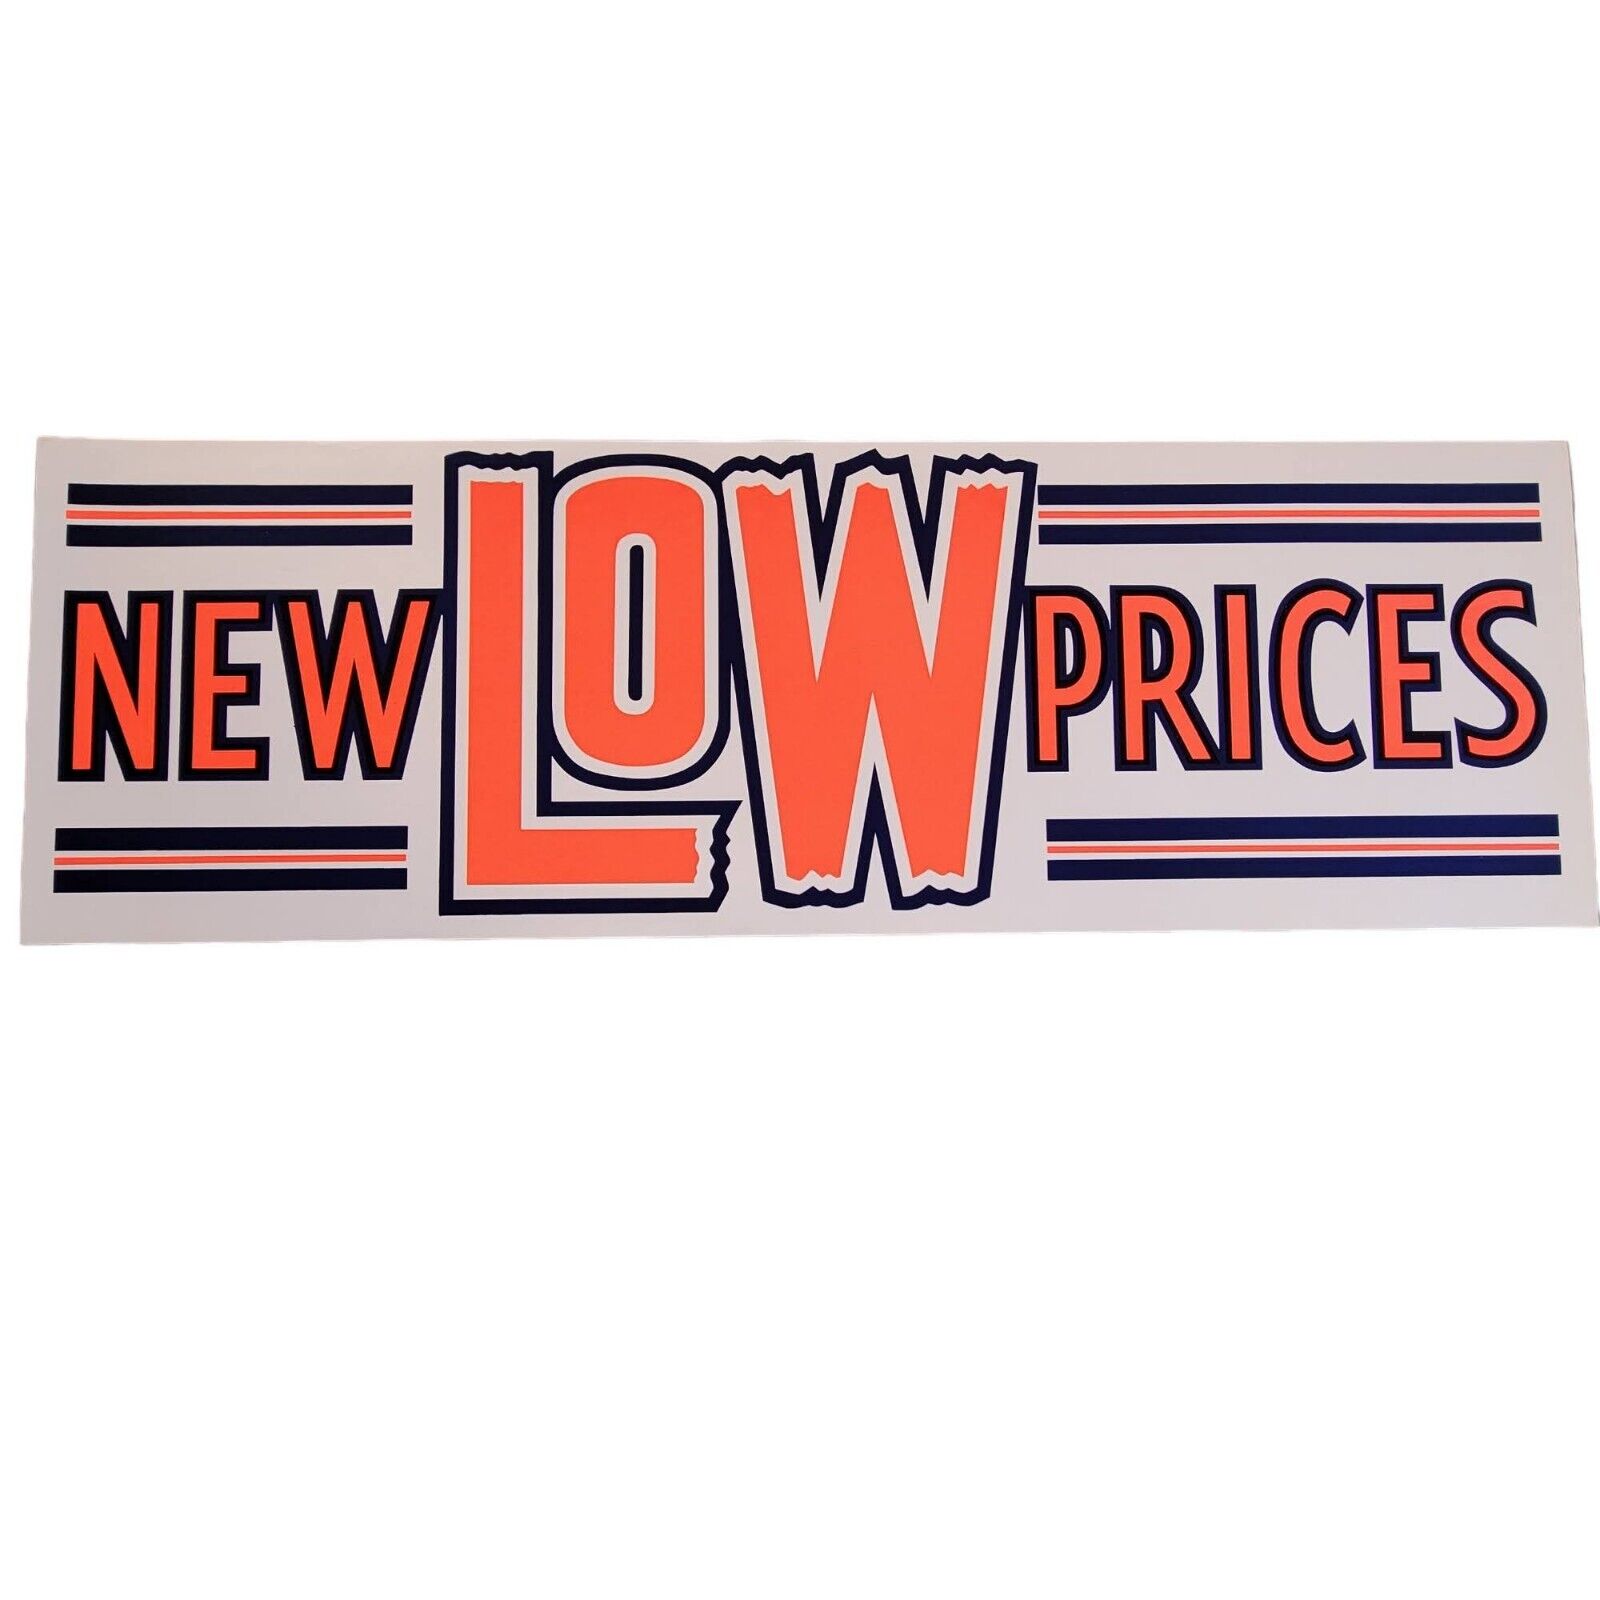 Original Vintage Advertising Poster 1940s Large Retail Banner Sign Low Prices